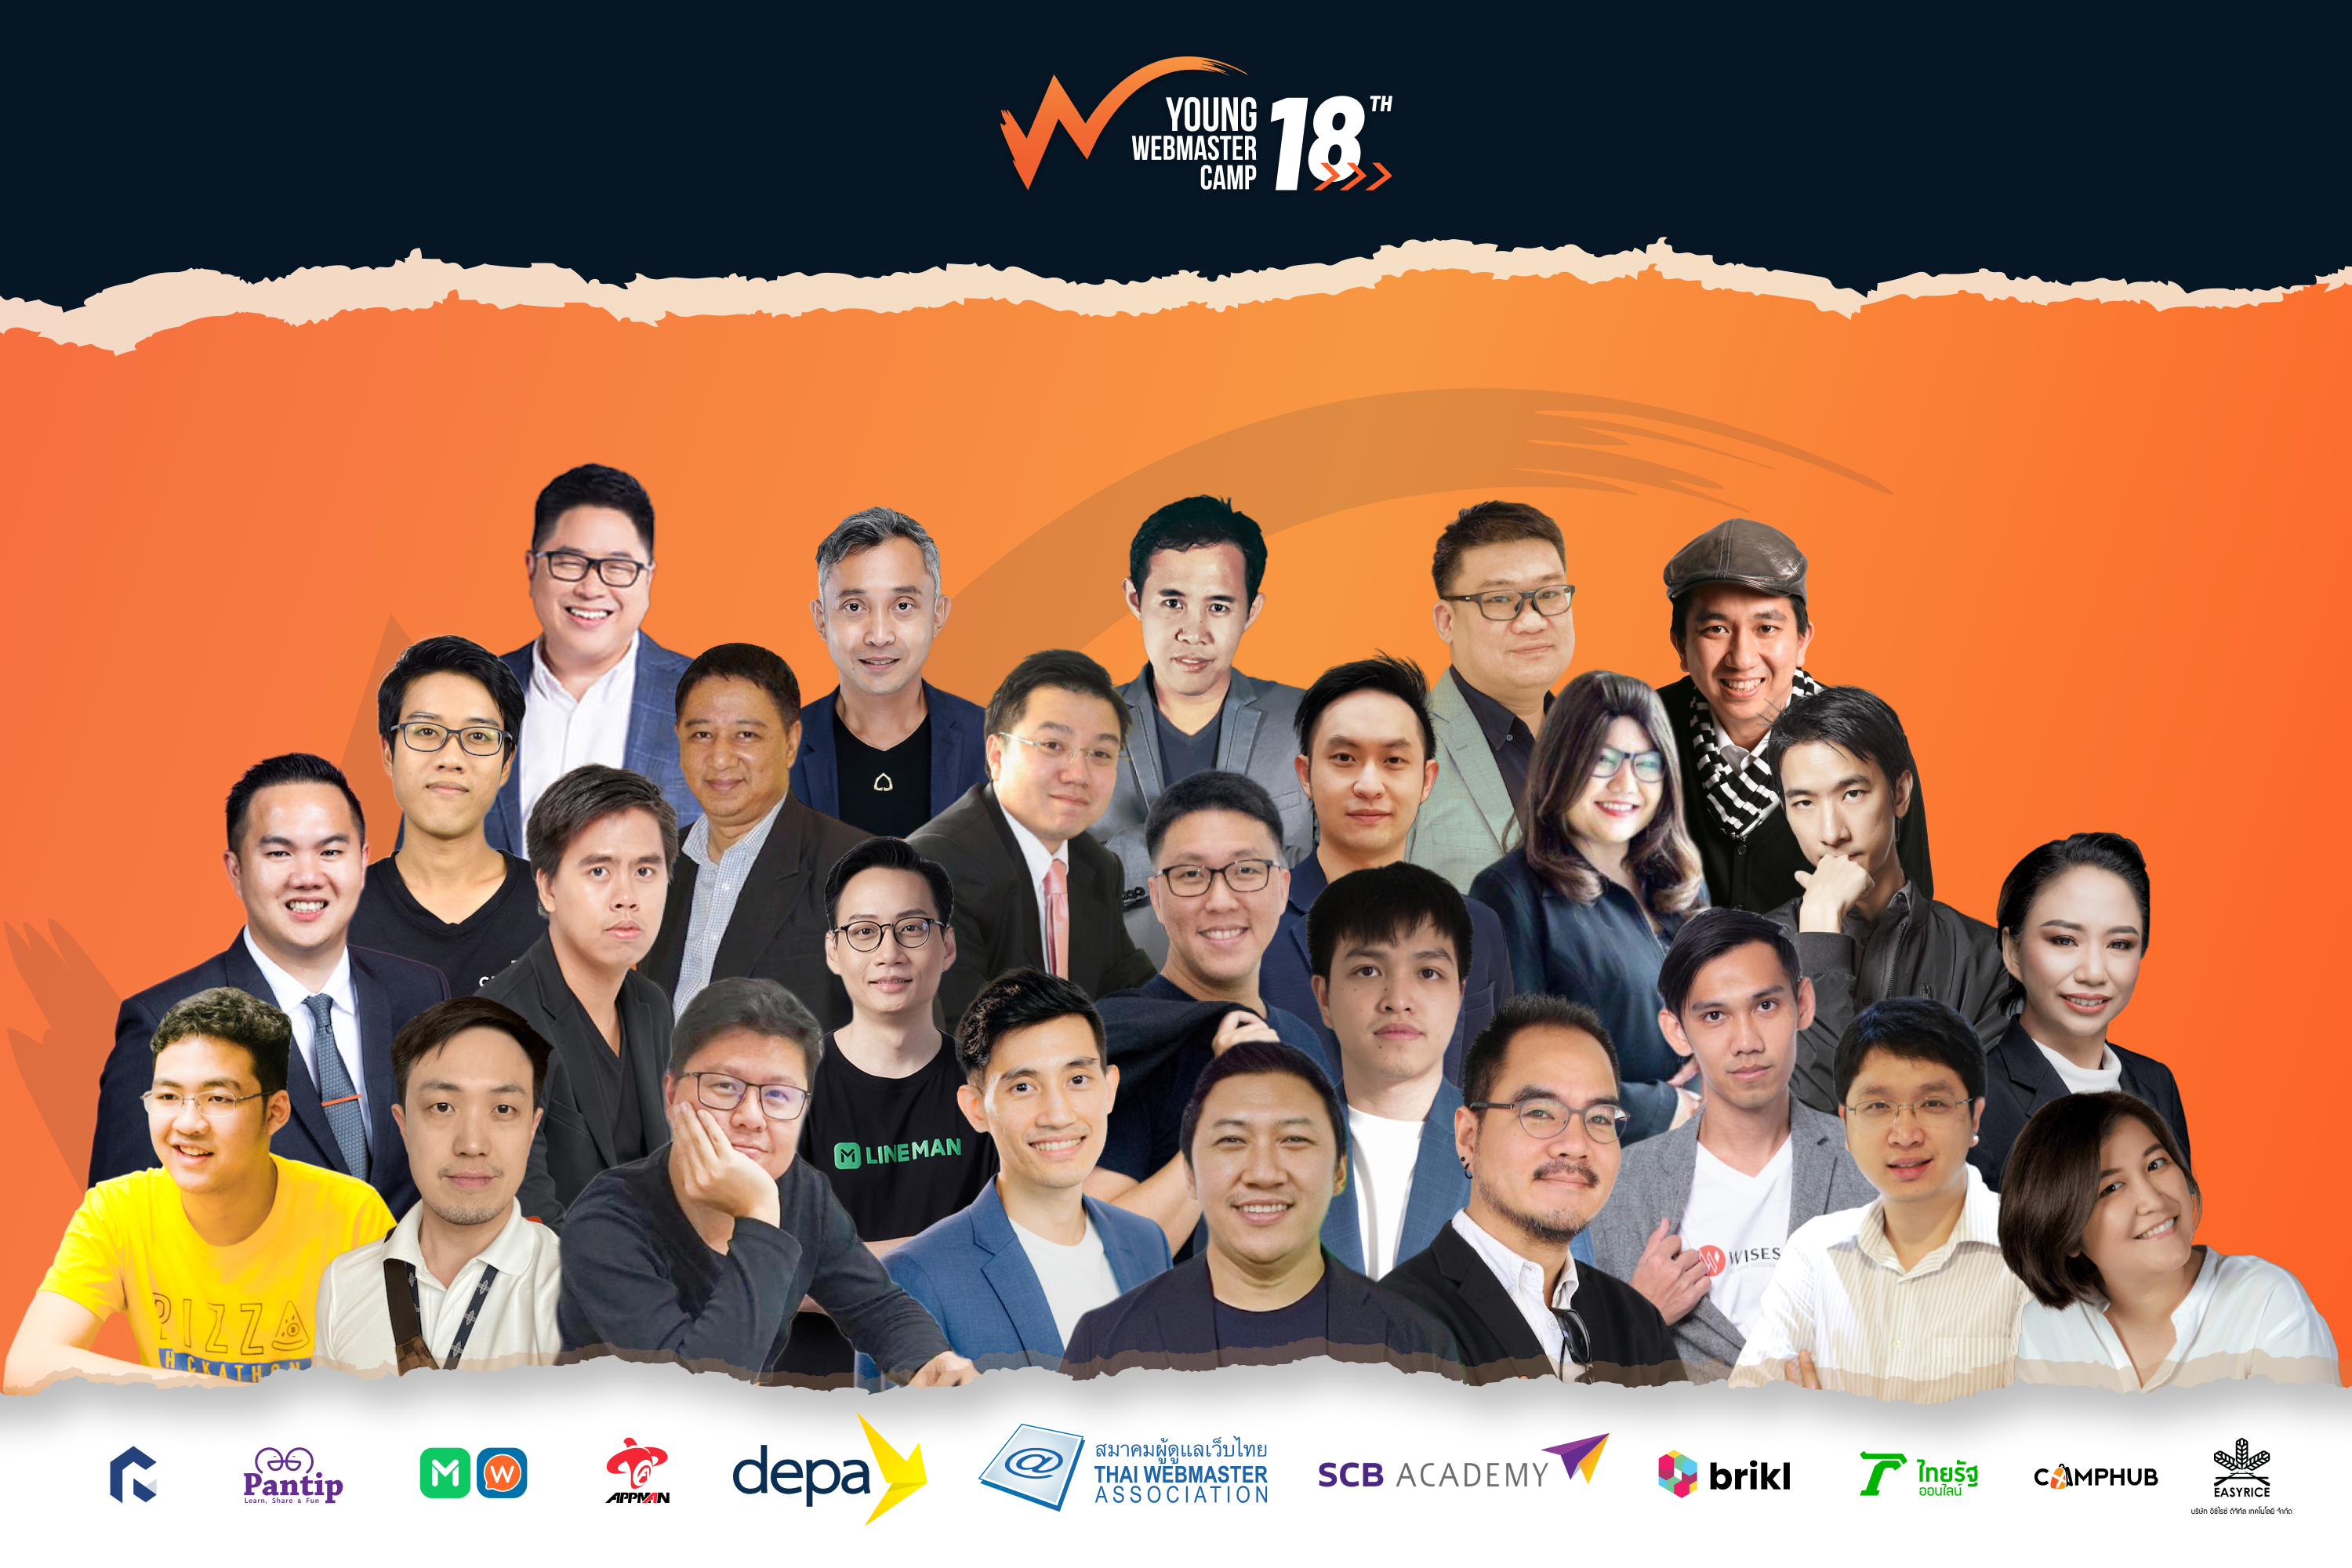 Cover Image for สมาคมผู้ดูแลเว็บไทย ปรับตัวรับสถานการณ์โควิด จัดค่ายใหญ่ด้านดิจิทัล  “Young Webmaster Camp ปีที่ 18” ออนไลน์ครั้งแรก